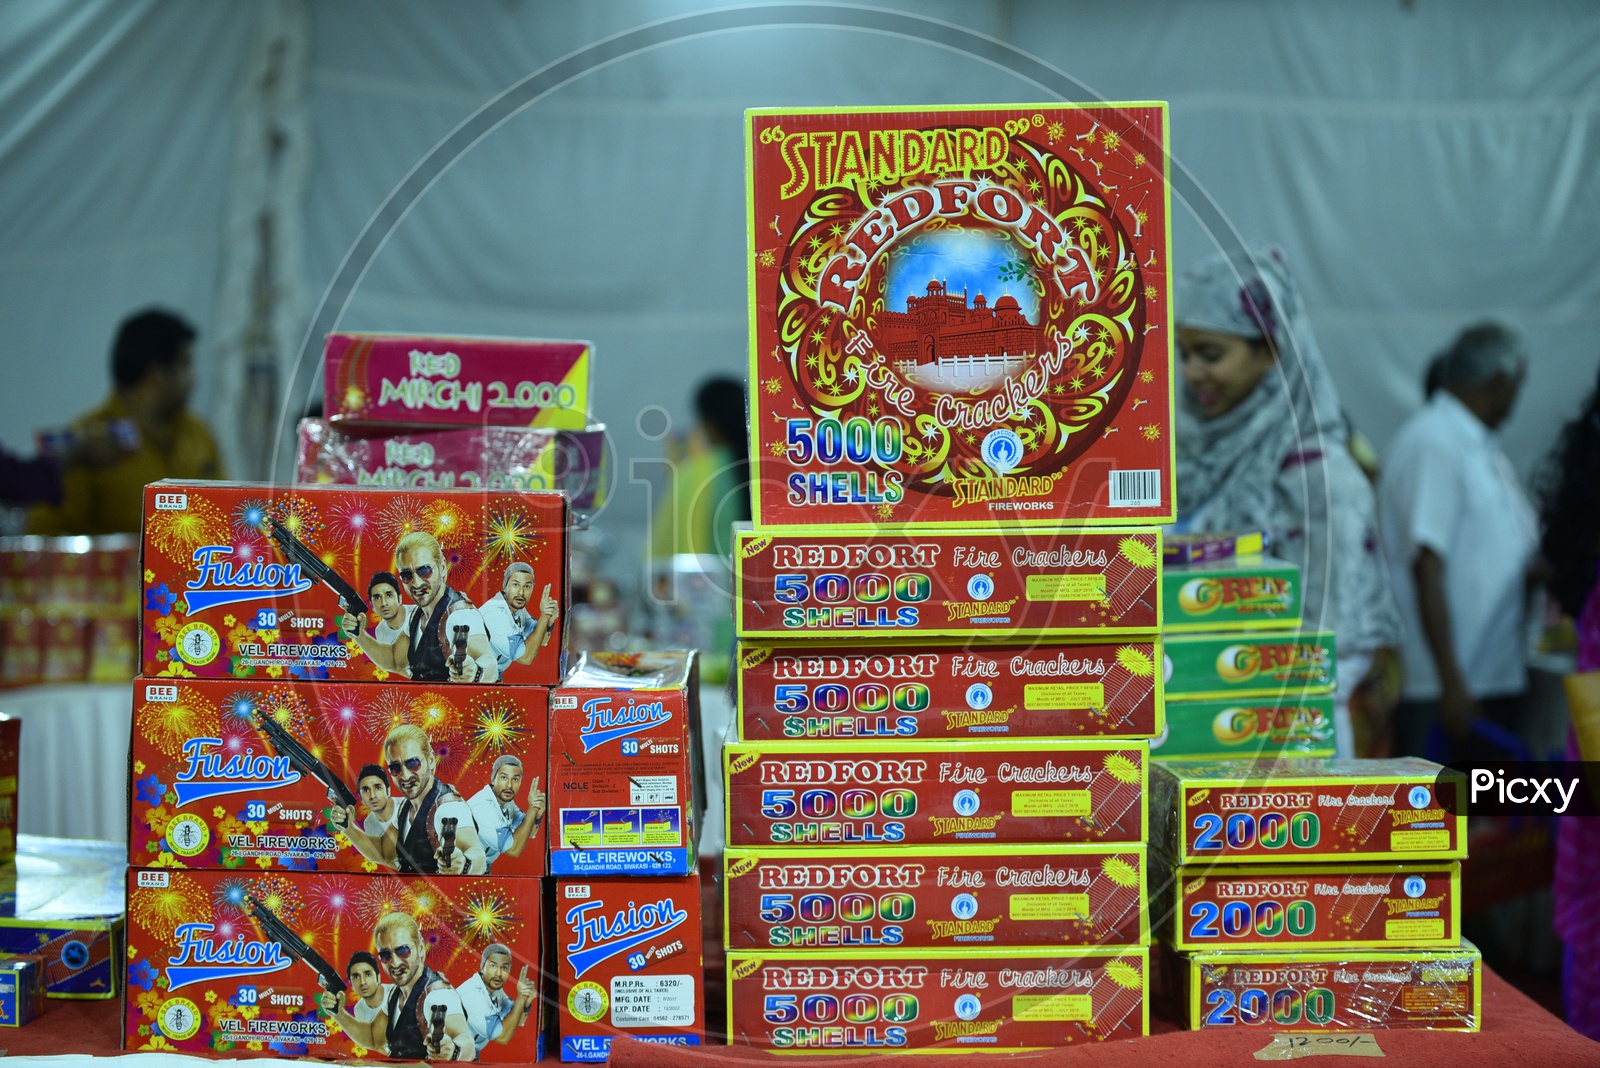 Firecrackers For Diwali